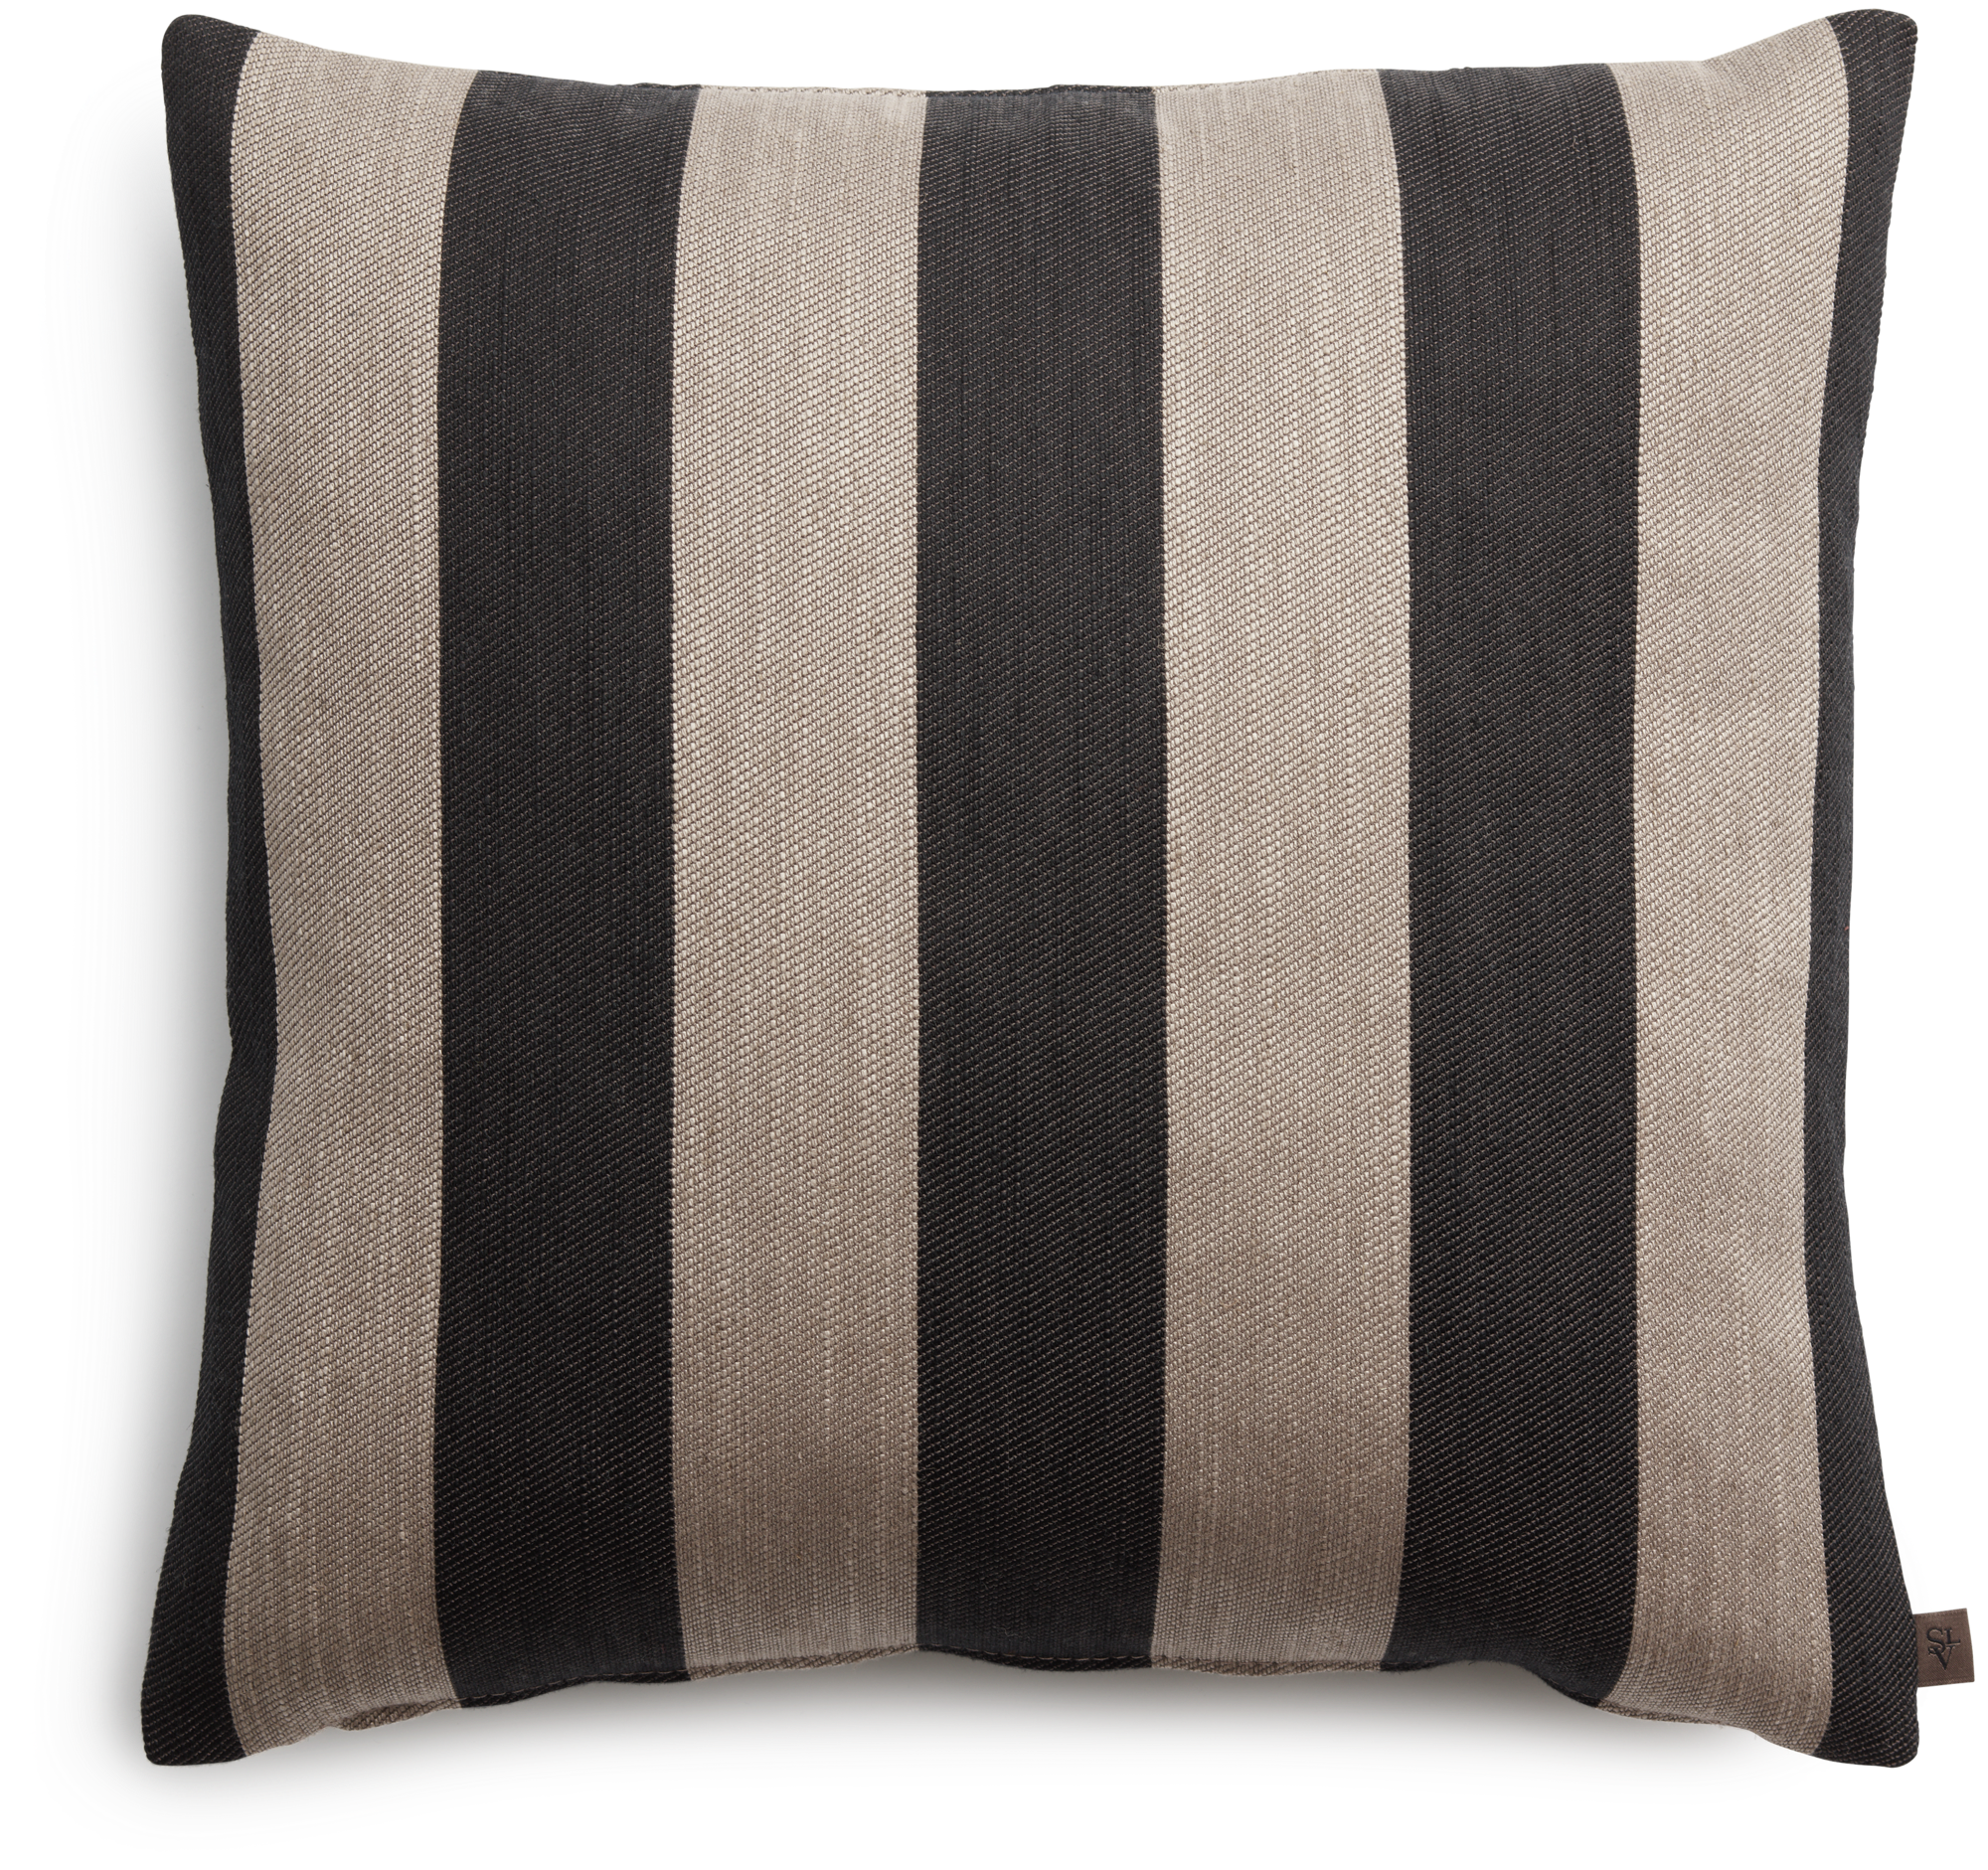 Zenith decorative pillow